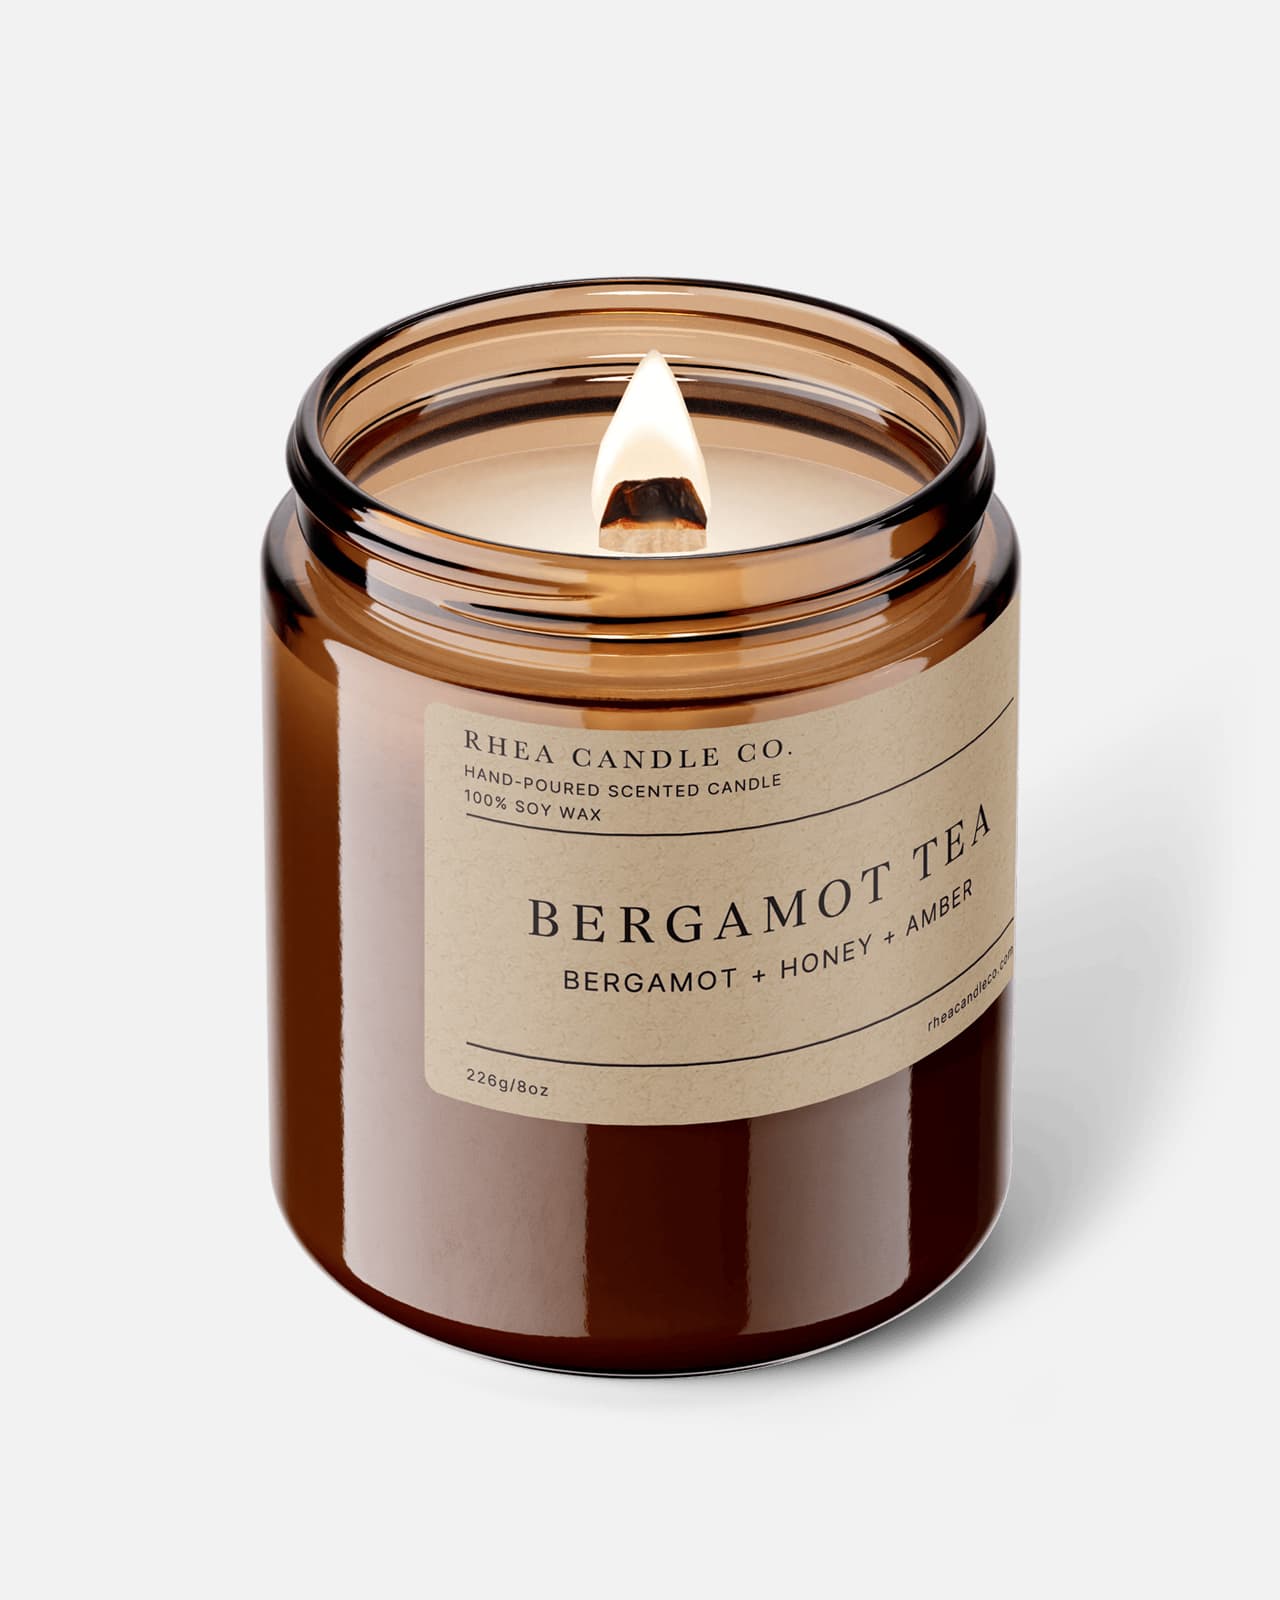 Bergamot Tea Candle | Bergamot + Honey + Amber - Rhea Candle Co.